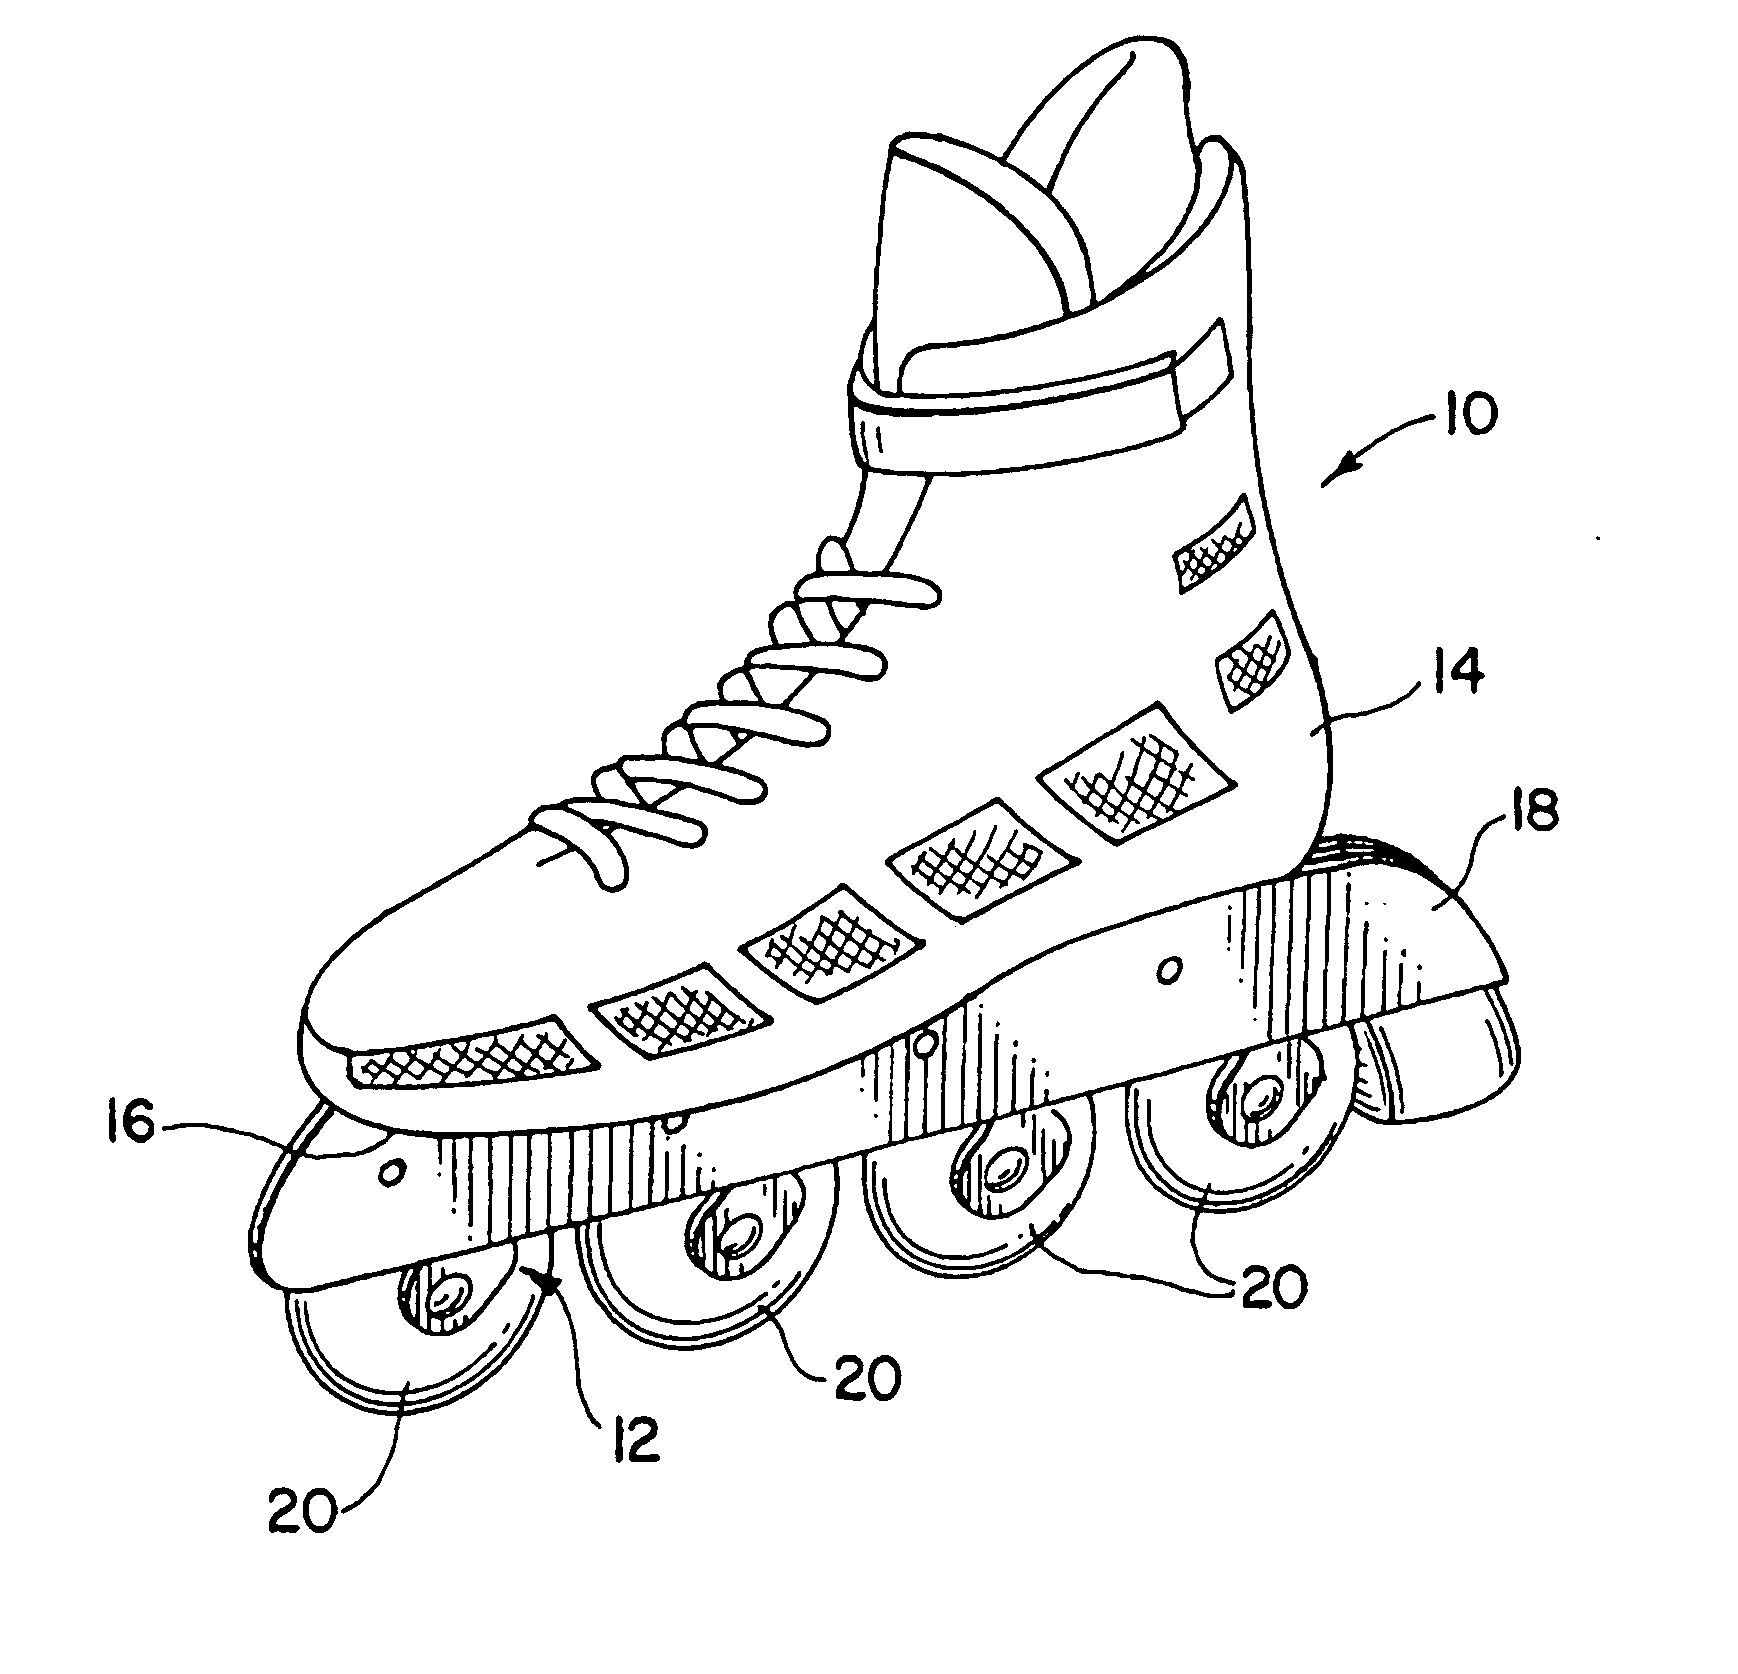 Independent suspension system for in-line skates having rocker arms and adjustable springs